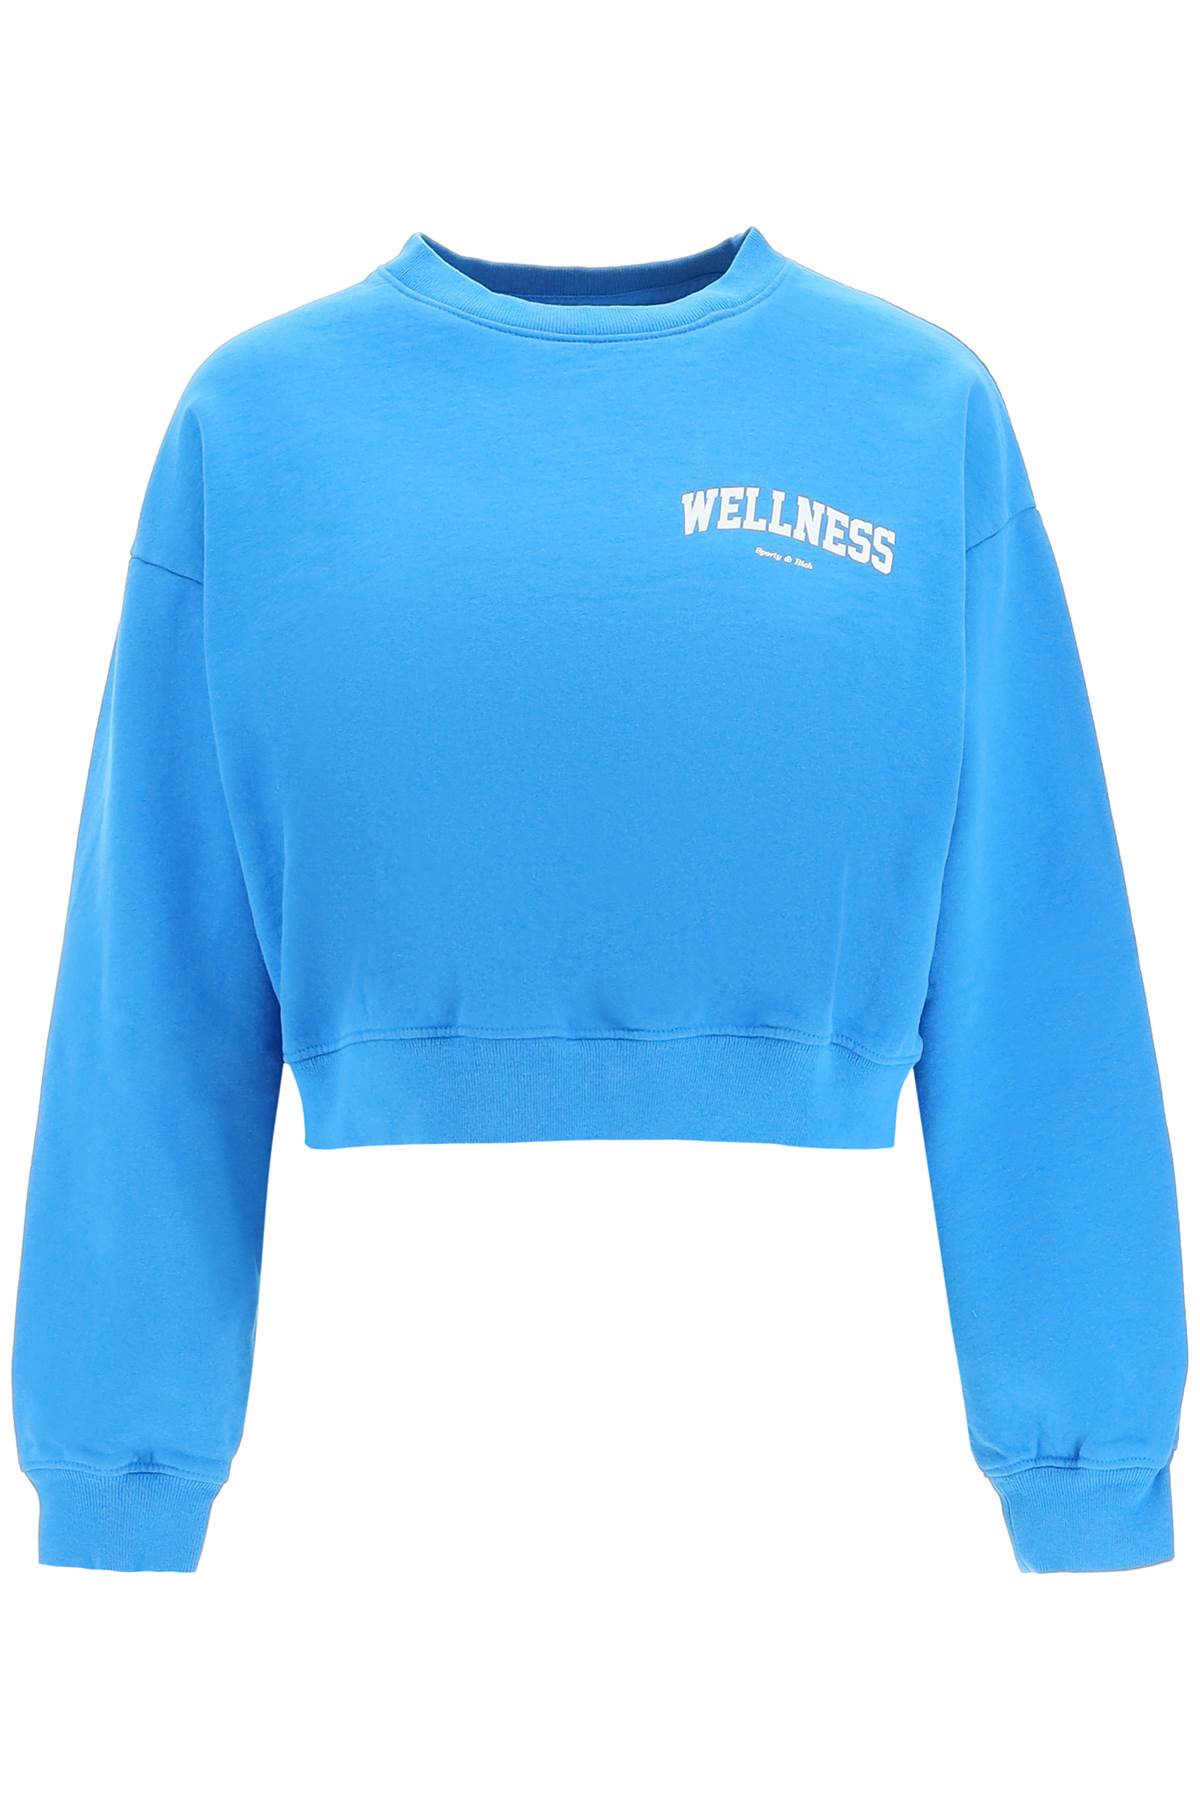 Sporty & Rich Wellness Ivy Cropped Sweatshirt